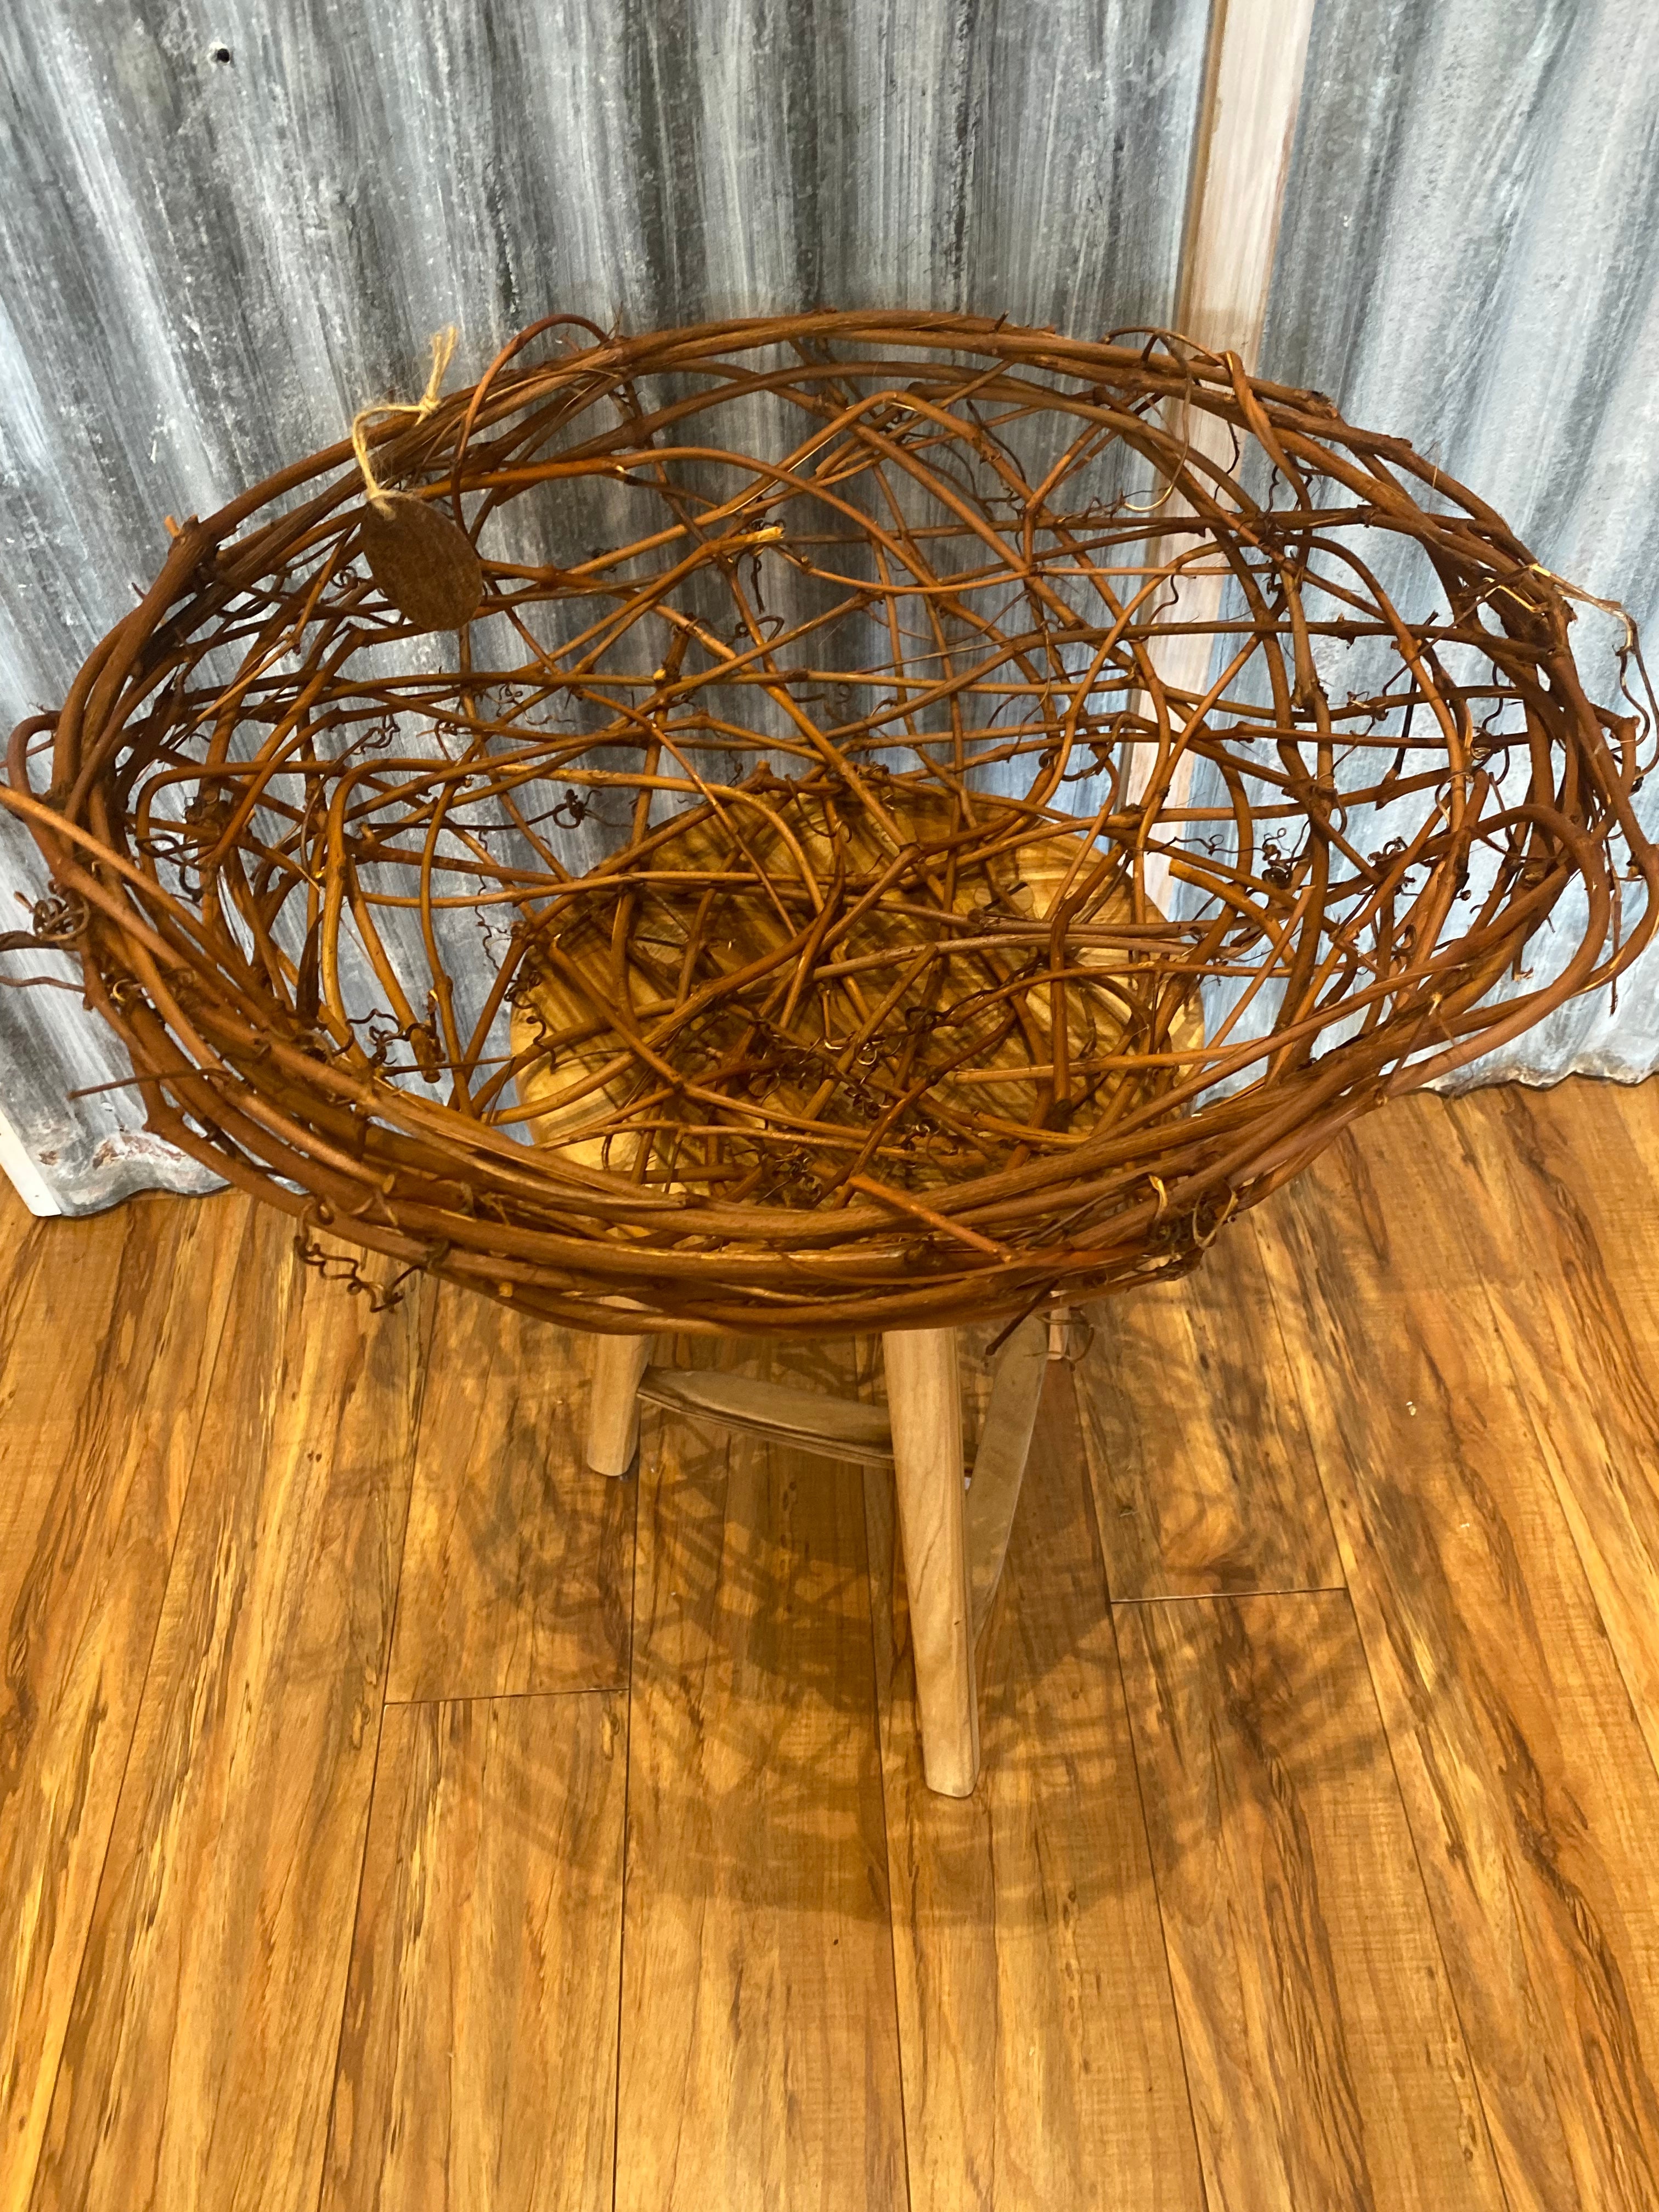 Branching Out Design large Grapevine basket